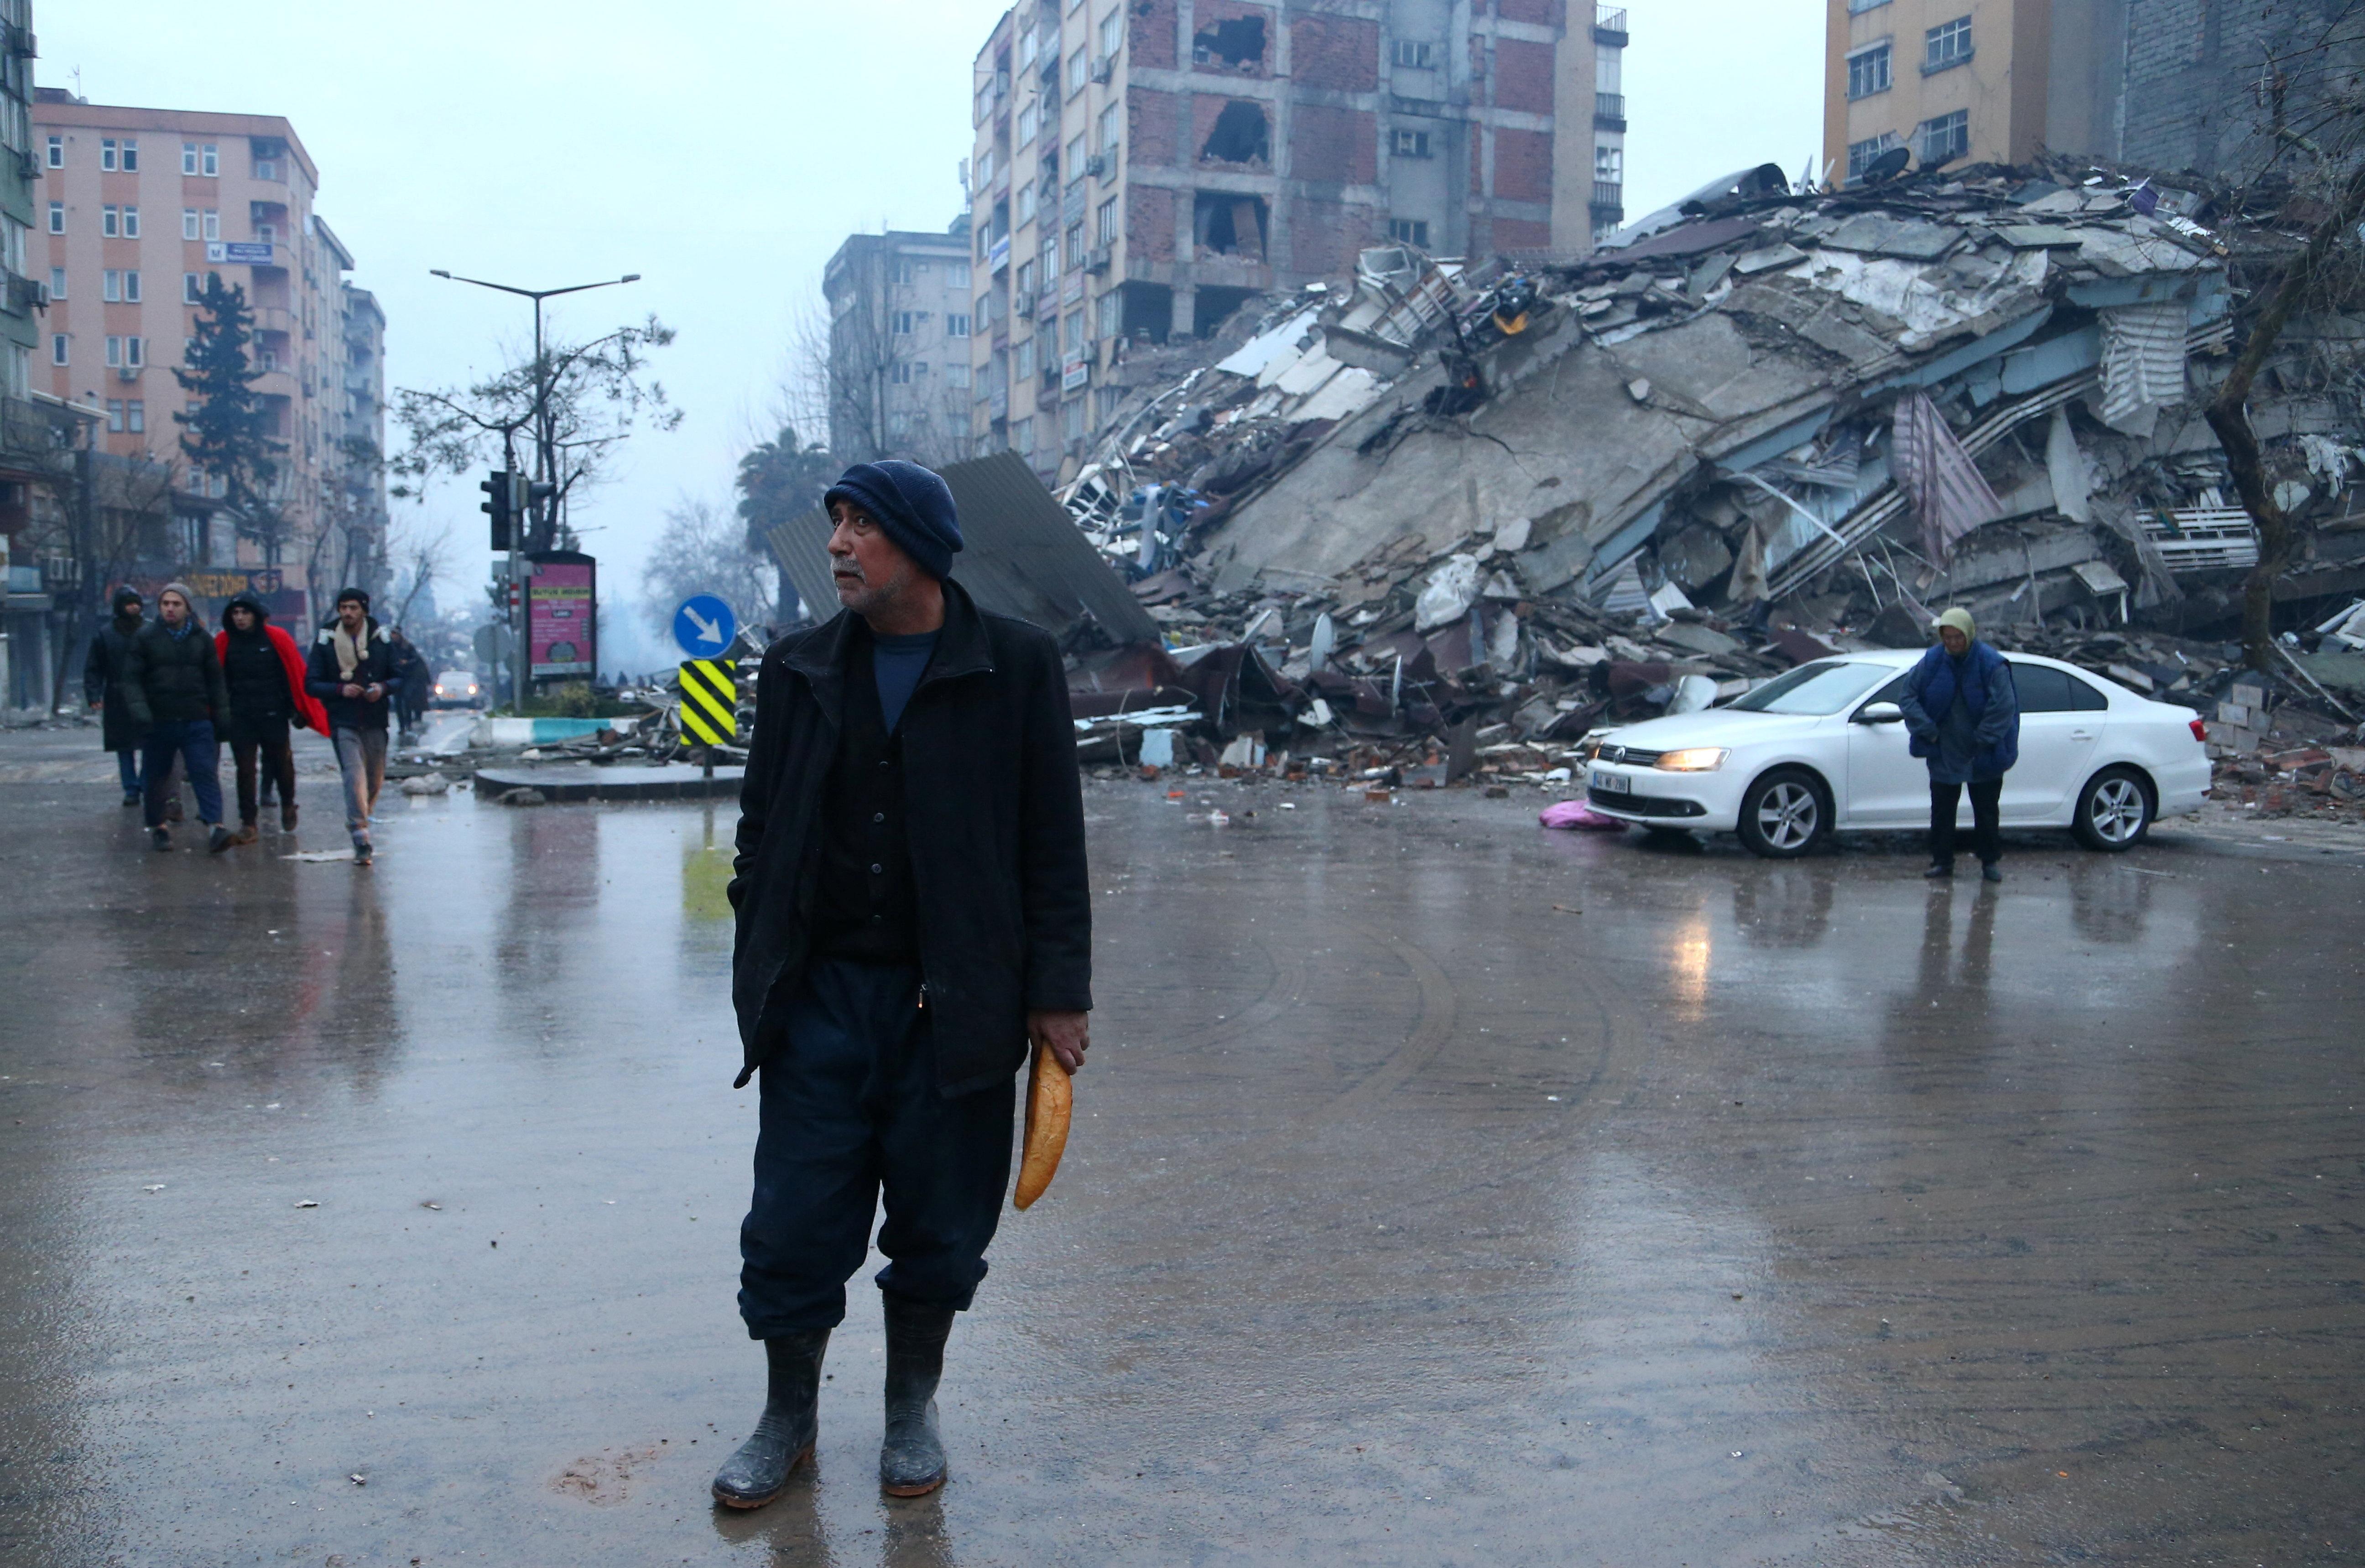 A man holding a bread walks in a street after an earthquake in Kahramanmaras, Turkey February 6, 2023. REUTERS/Cagla Gurdogan